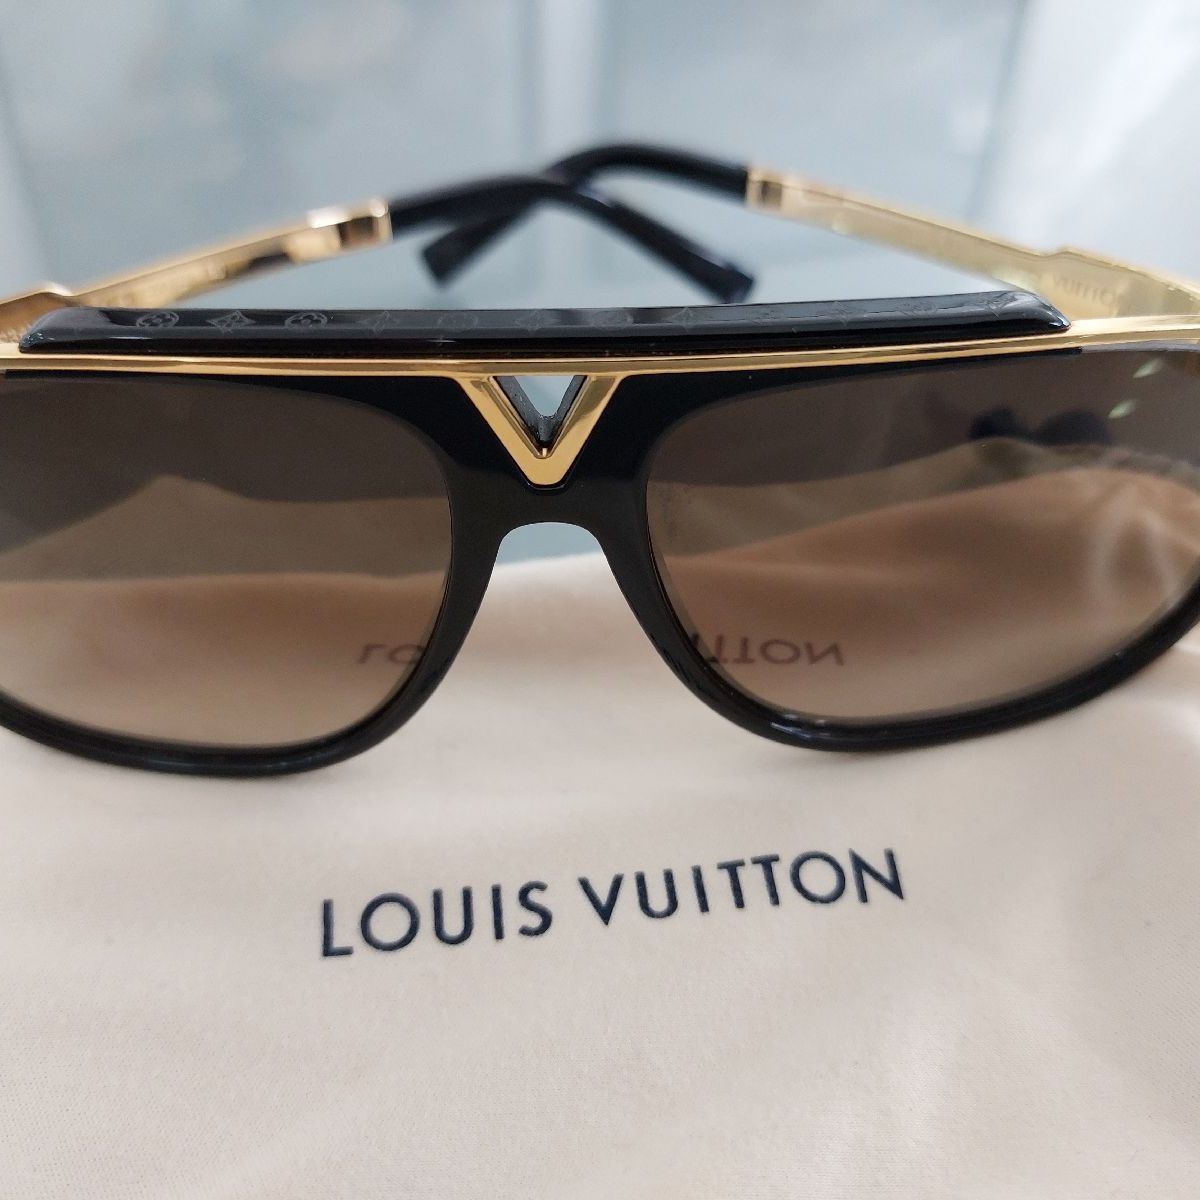 Preços baixos em Óculos de sol óculos de sol E Louis Vuitton